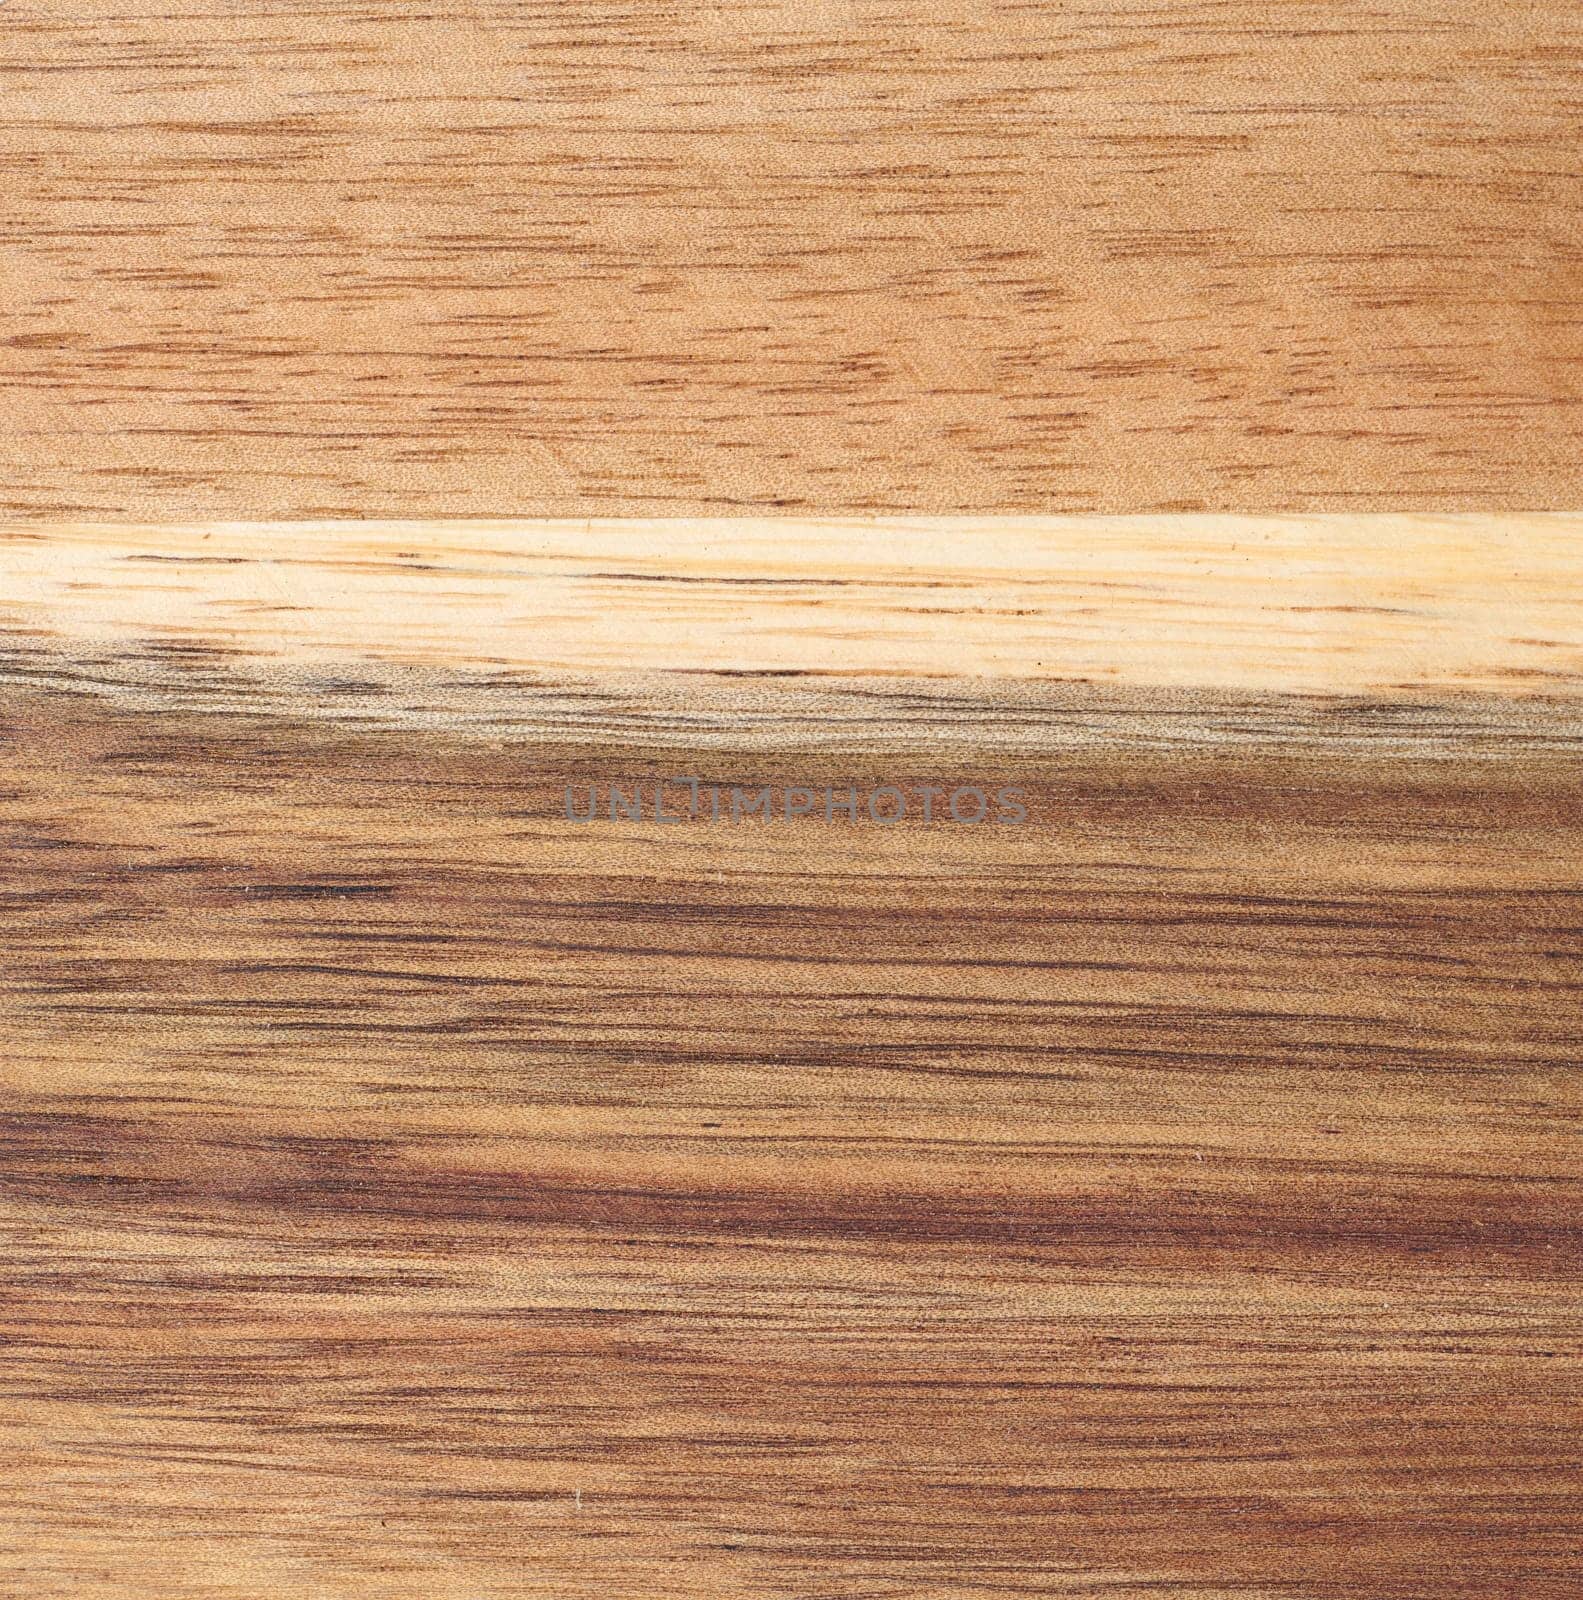 Brown wood texture, close up